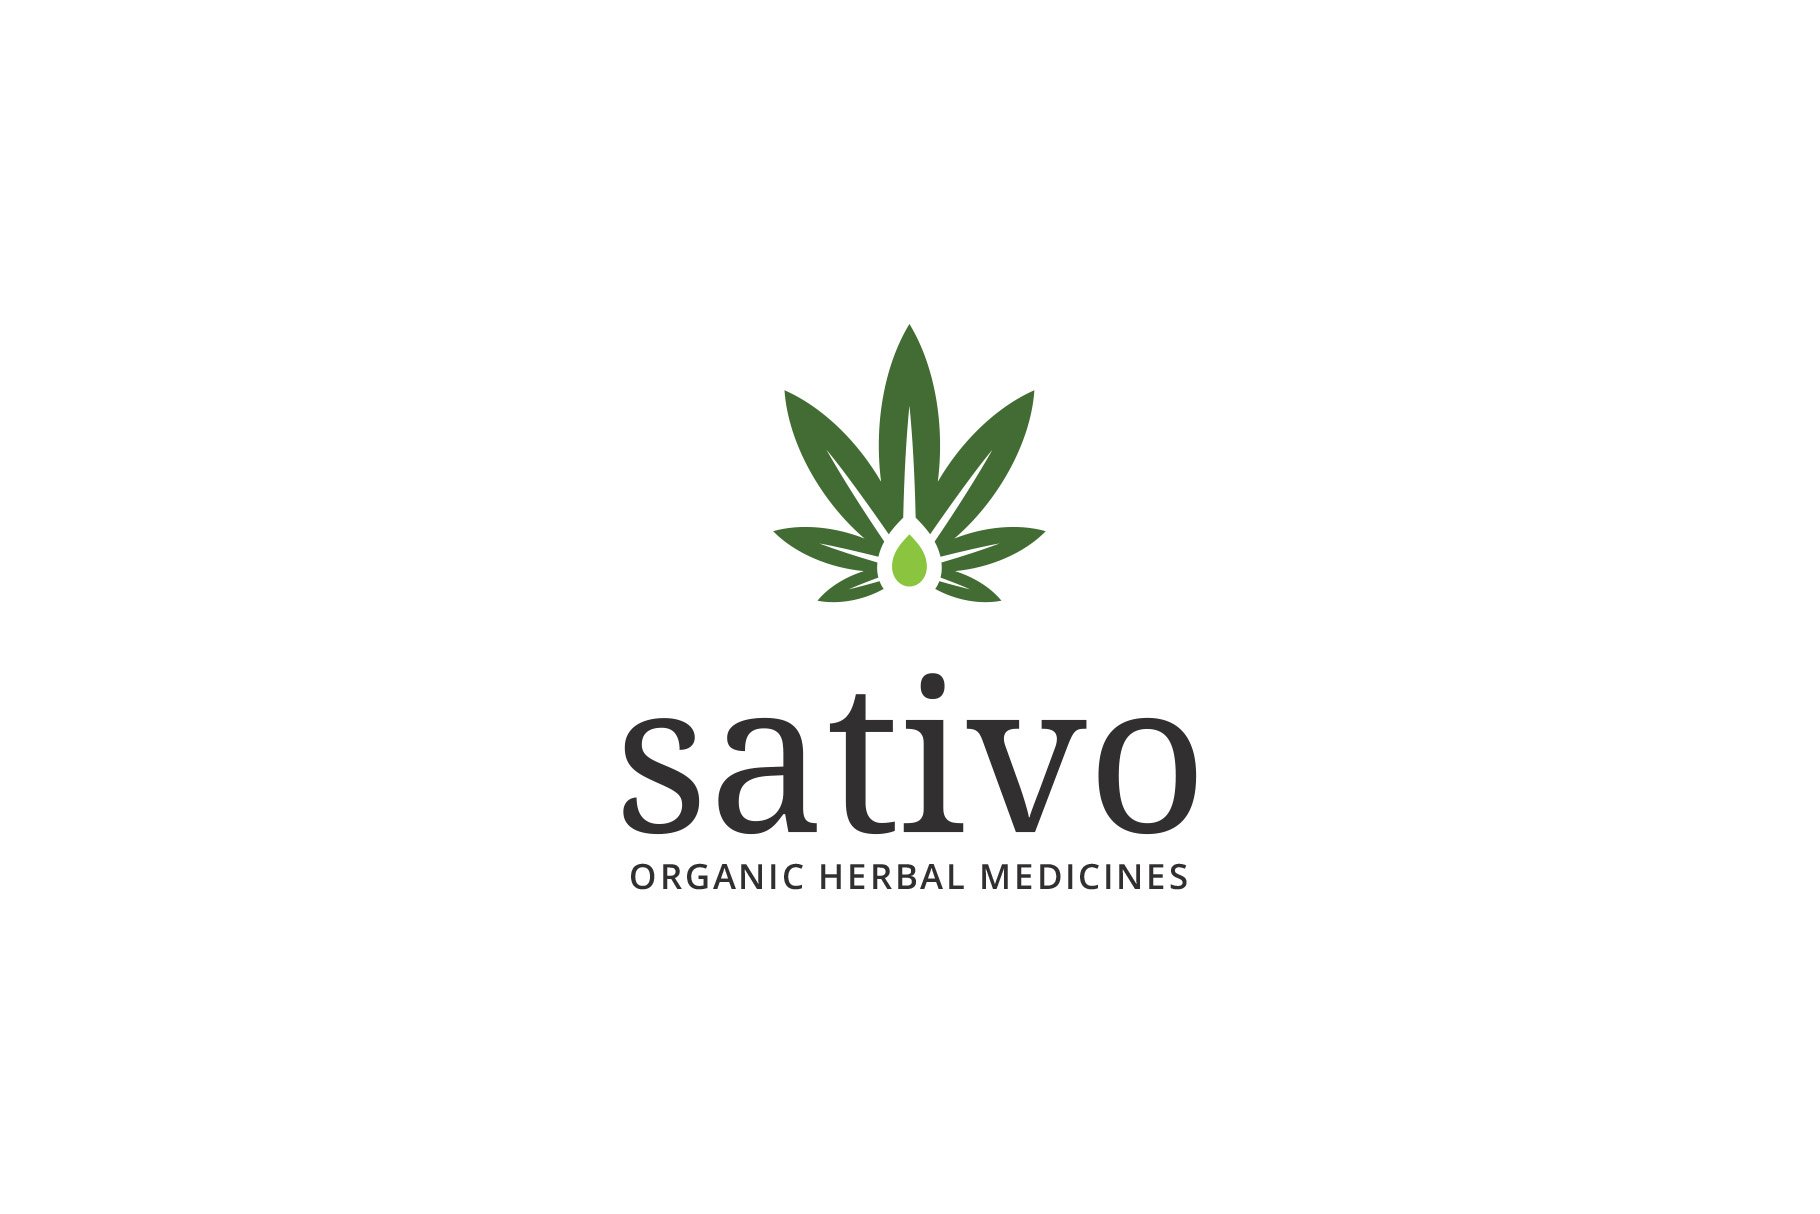 Sativo Cannabis Hemp Marijuana Logo cover image.